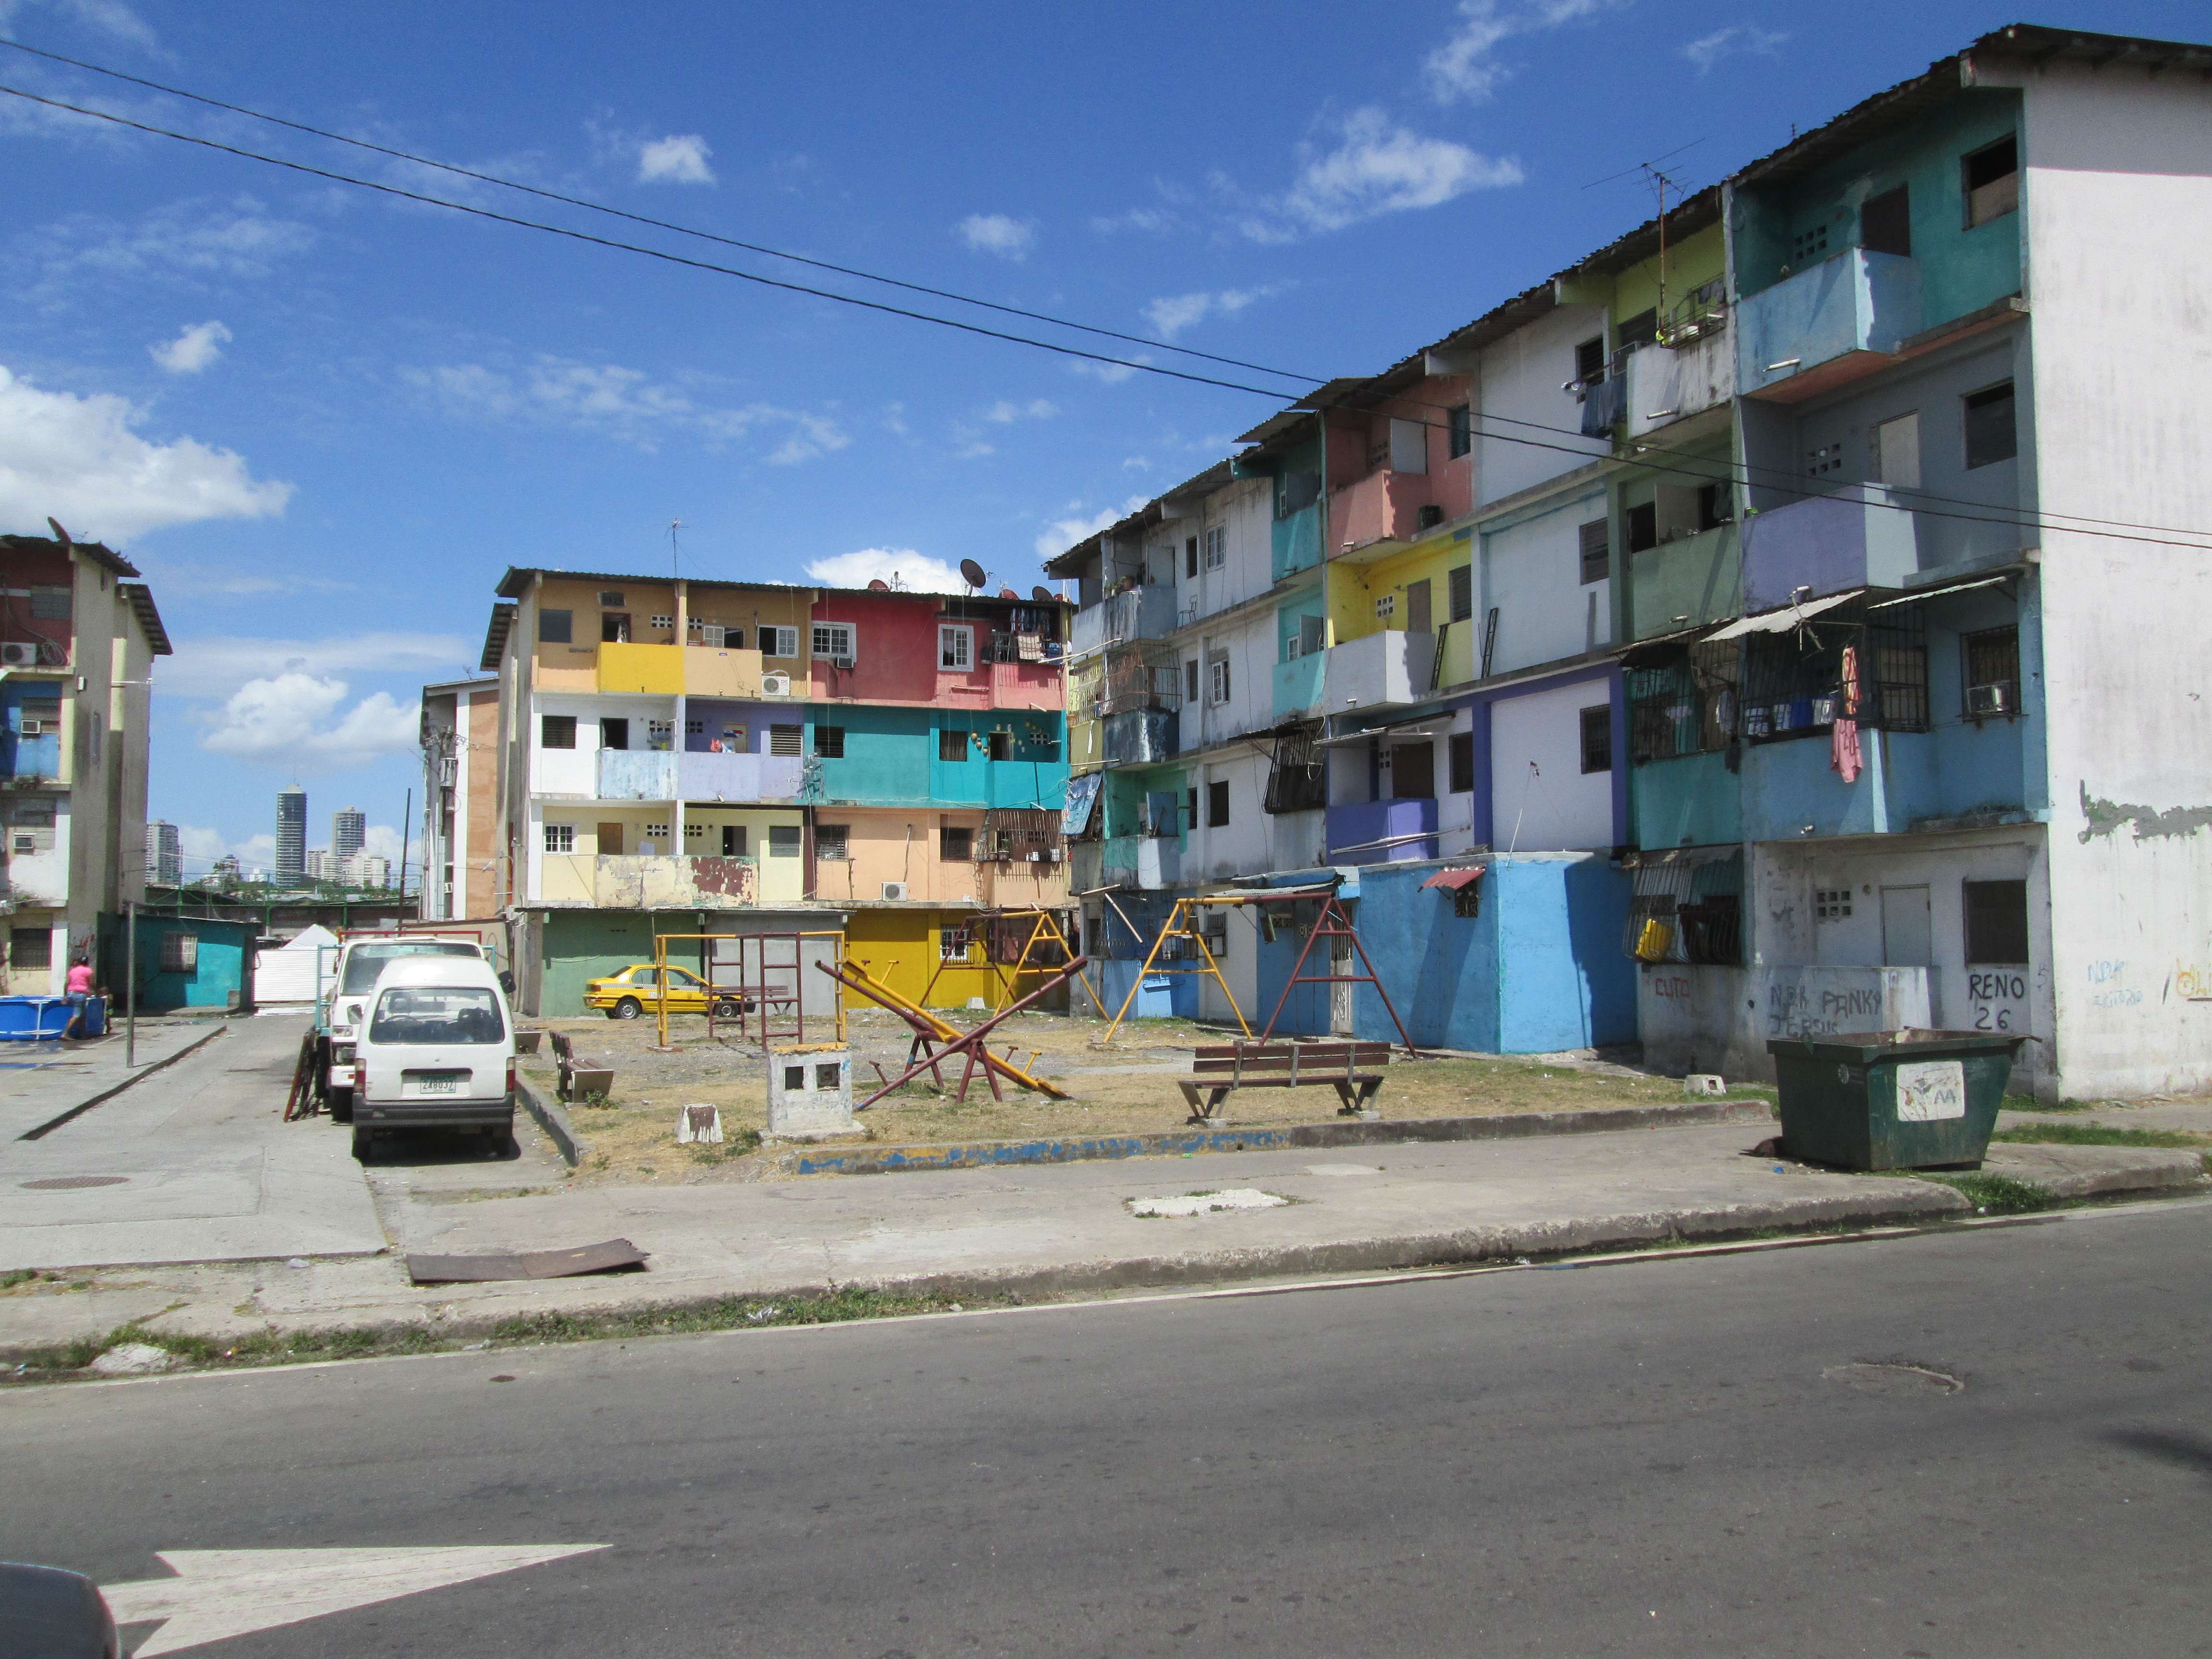 Colorful apartment blocks in Panama City